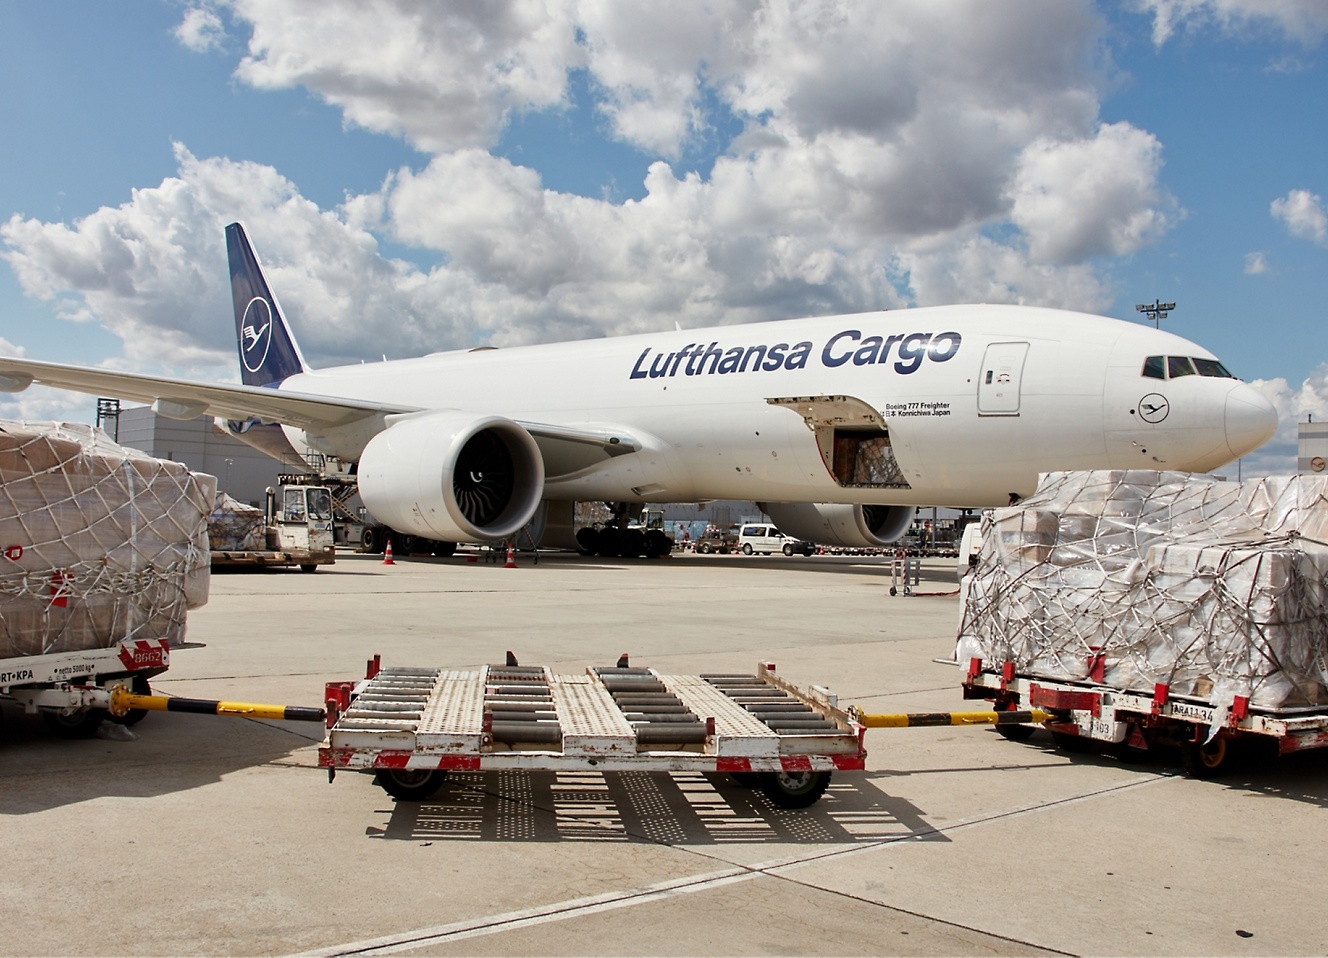 Vliegtuig van Lufthansa Cargo